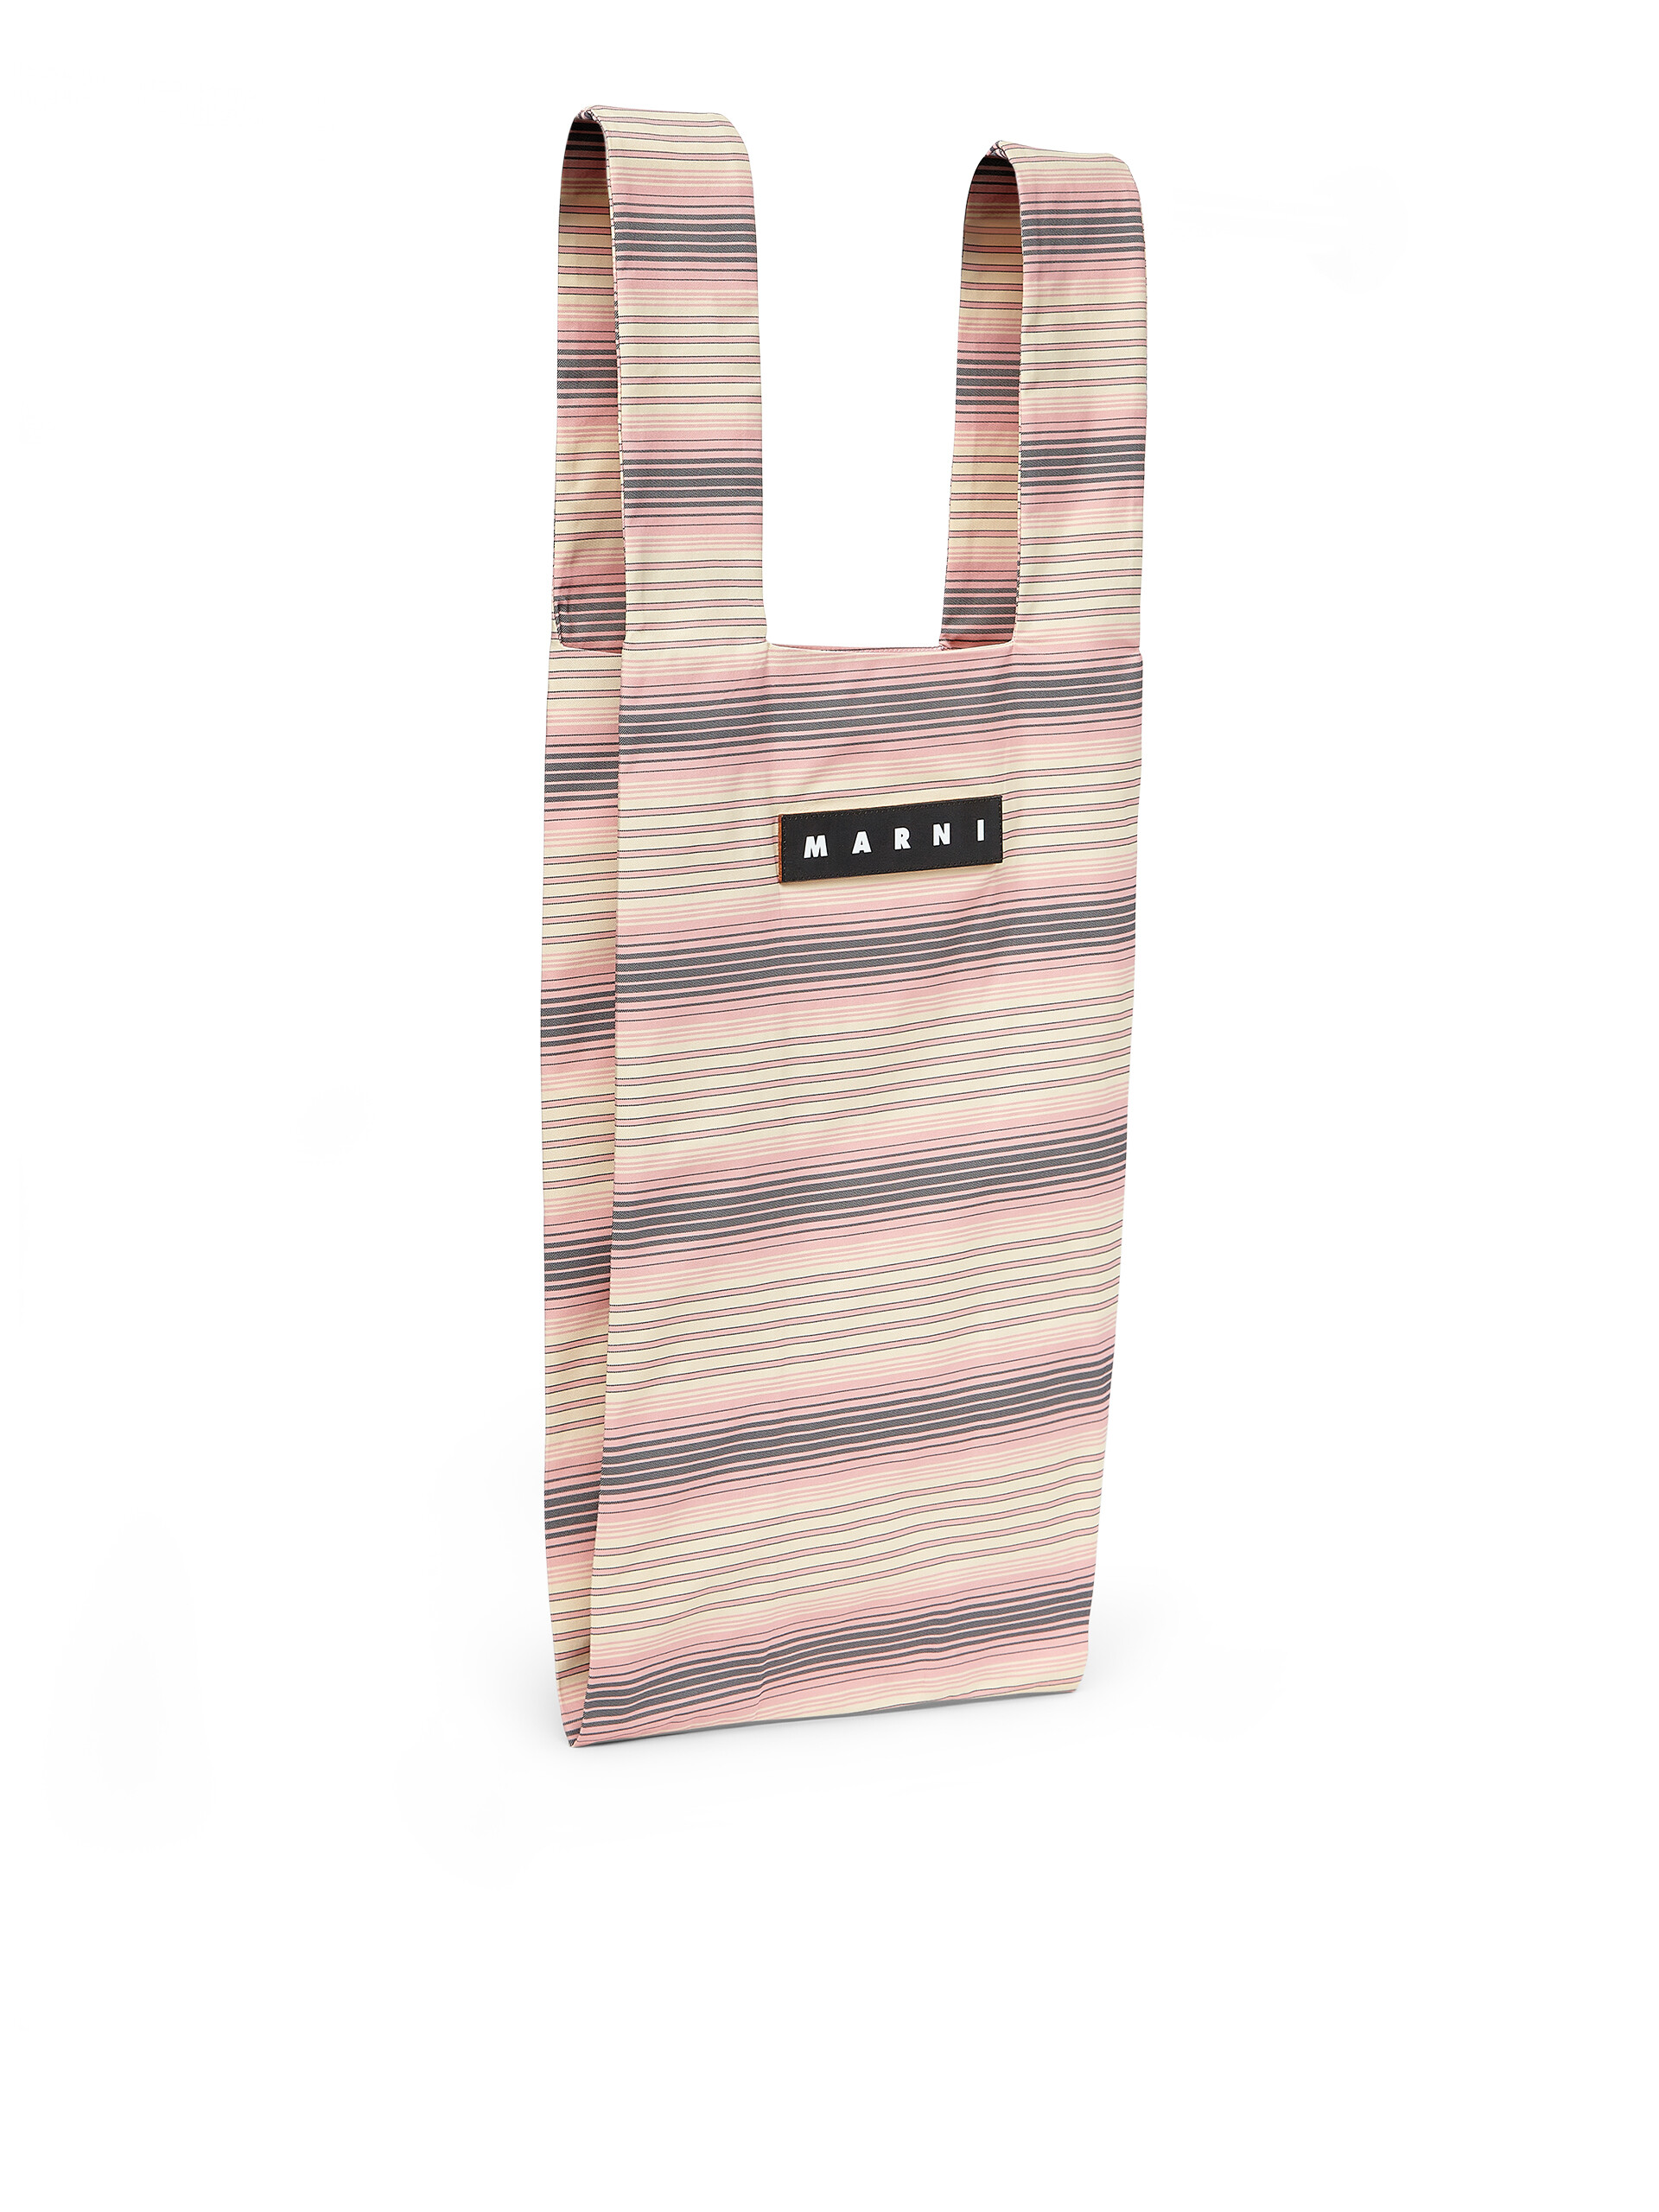 MARNI MARKET shopping bag with pink horizontal striped print - Bags - Image 2